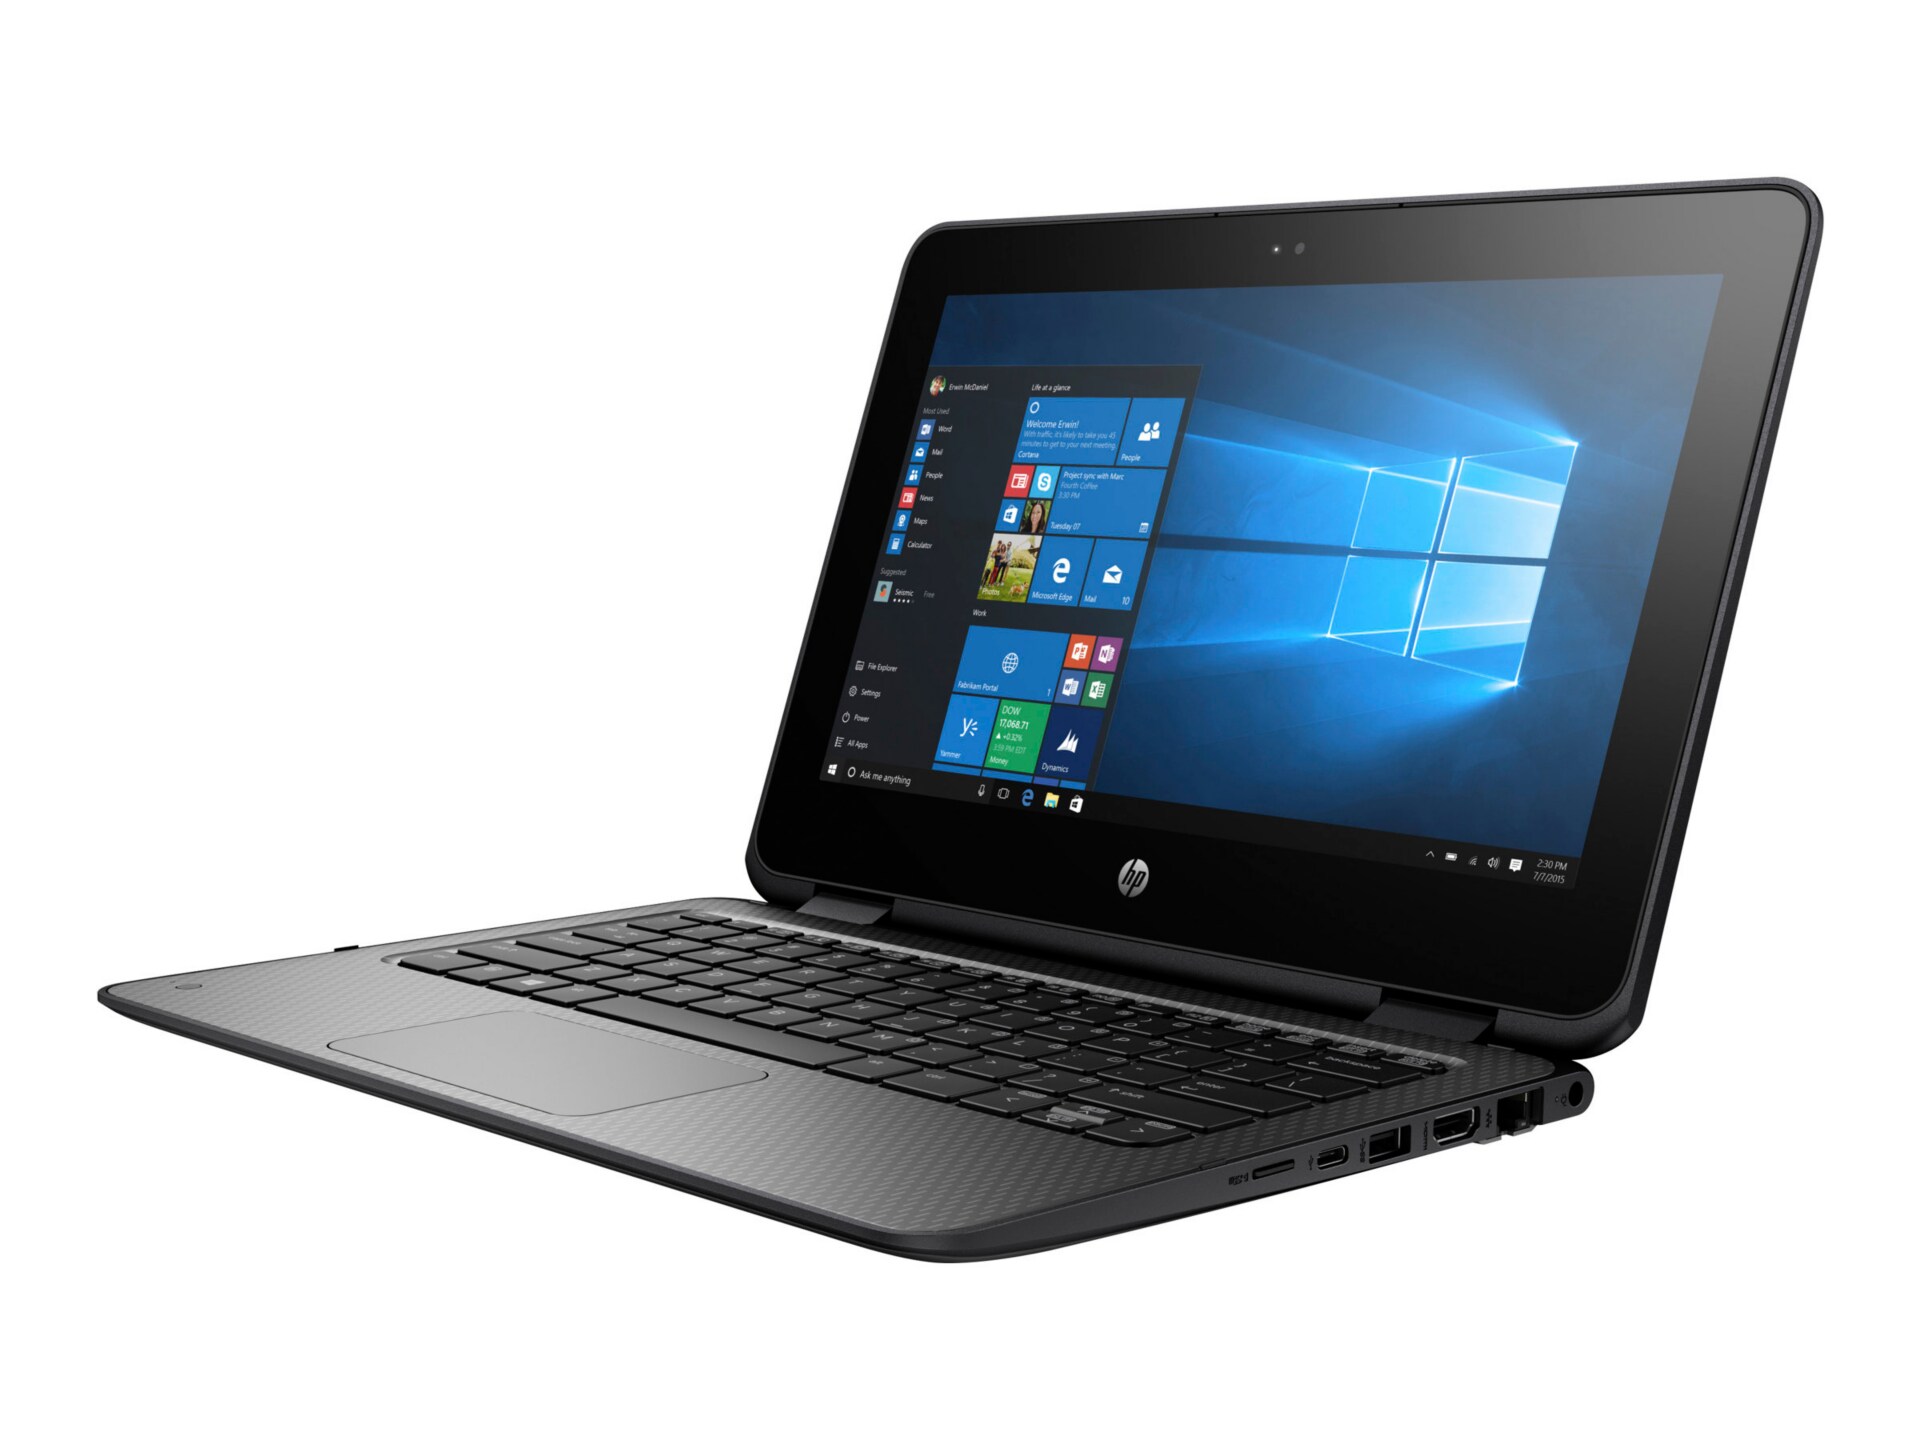 HP ProBook x360 11 G1 EE- Education Edition - 11.6" - Celeron N3350 - 4 GB